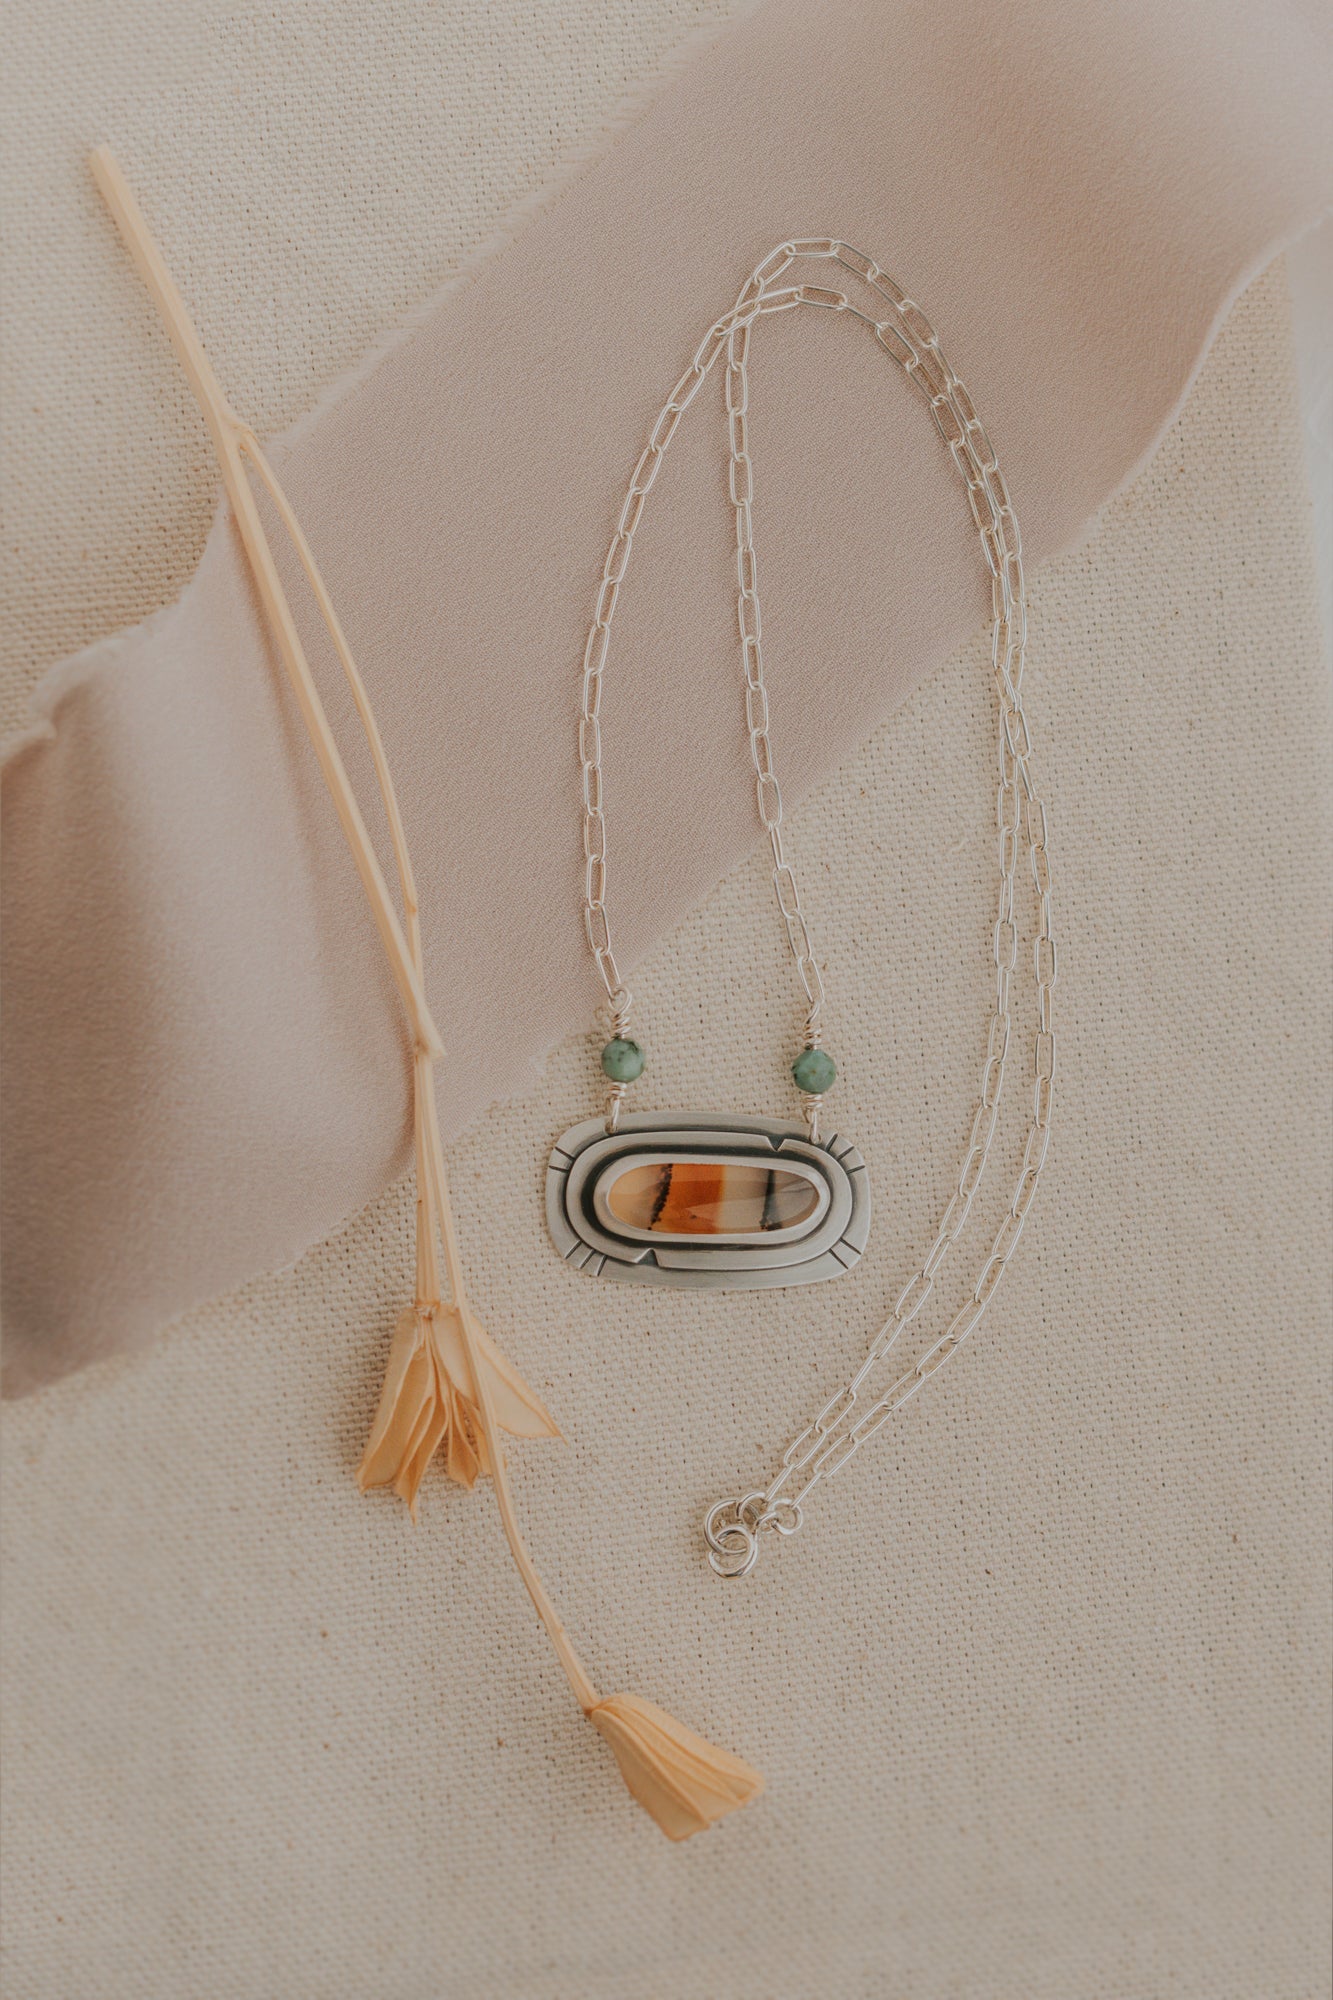 Montana Agate + Turquoise Necklace - Third Hand Silversmith LLC handmade jewelry, Bozeman, Montana